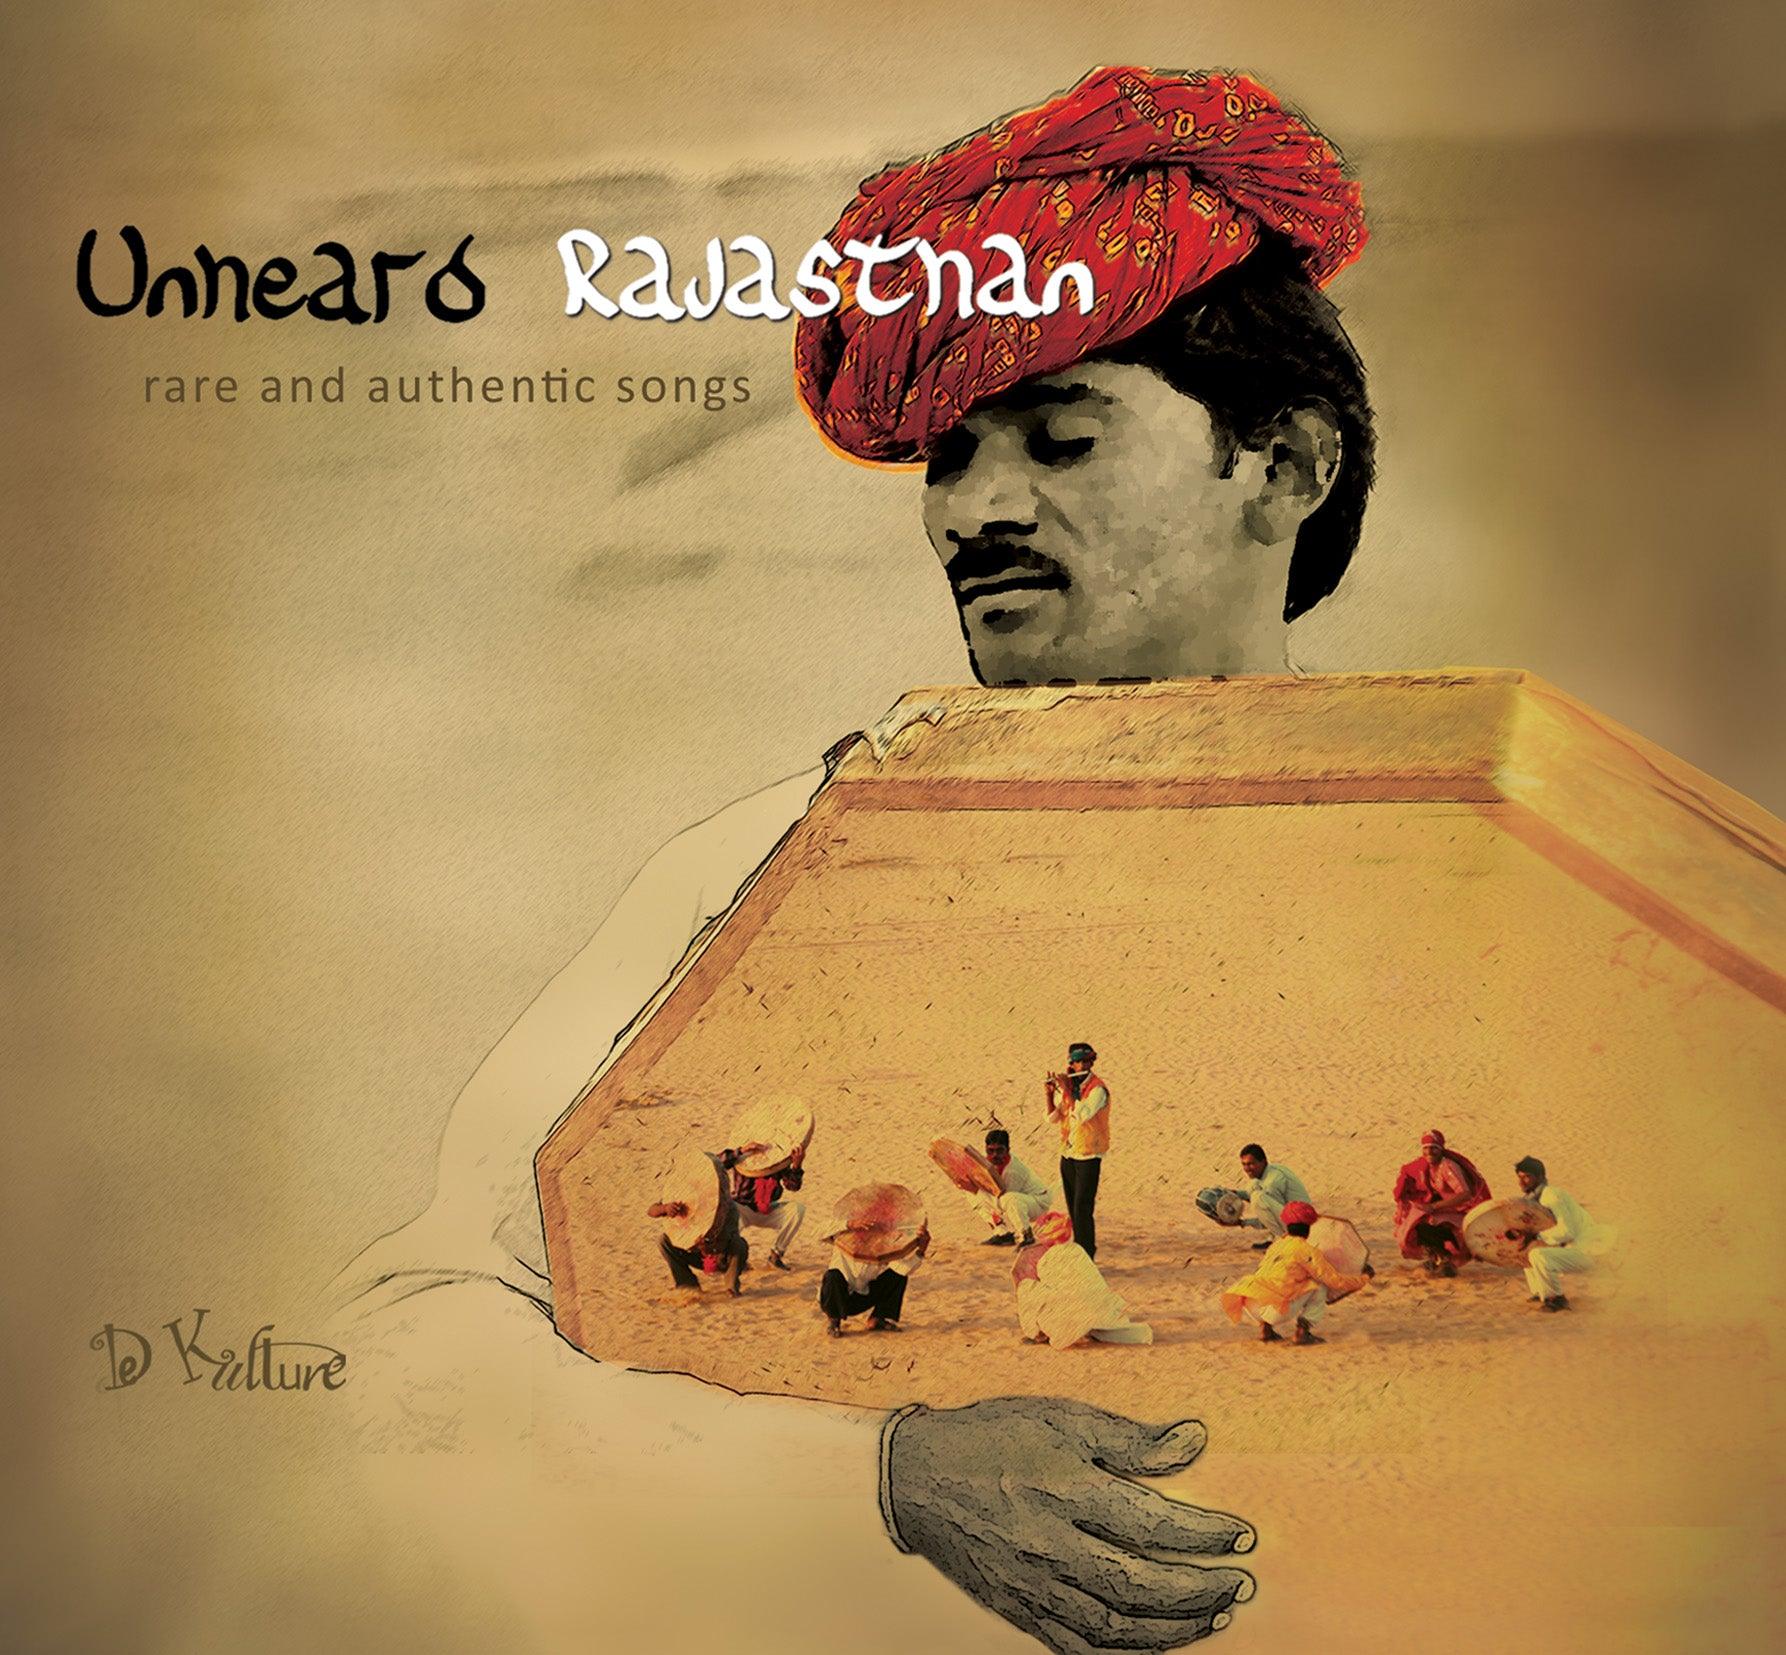 Unheard Rajasthani Instrumental Songs CD - DeKulture DKM-026-A